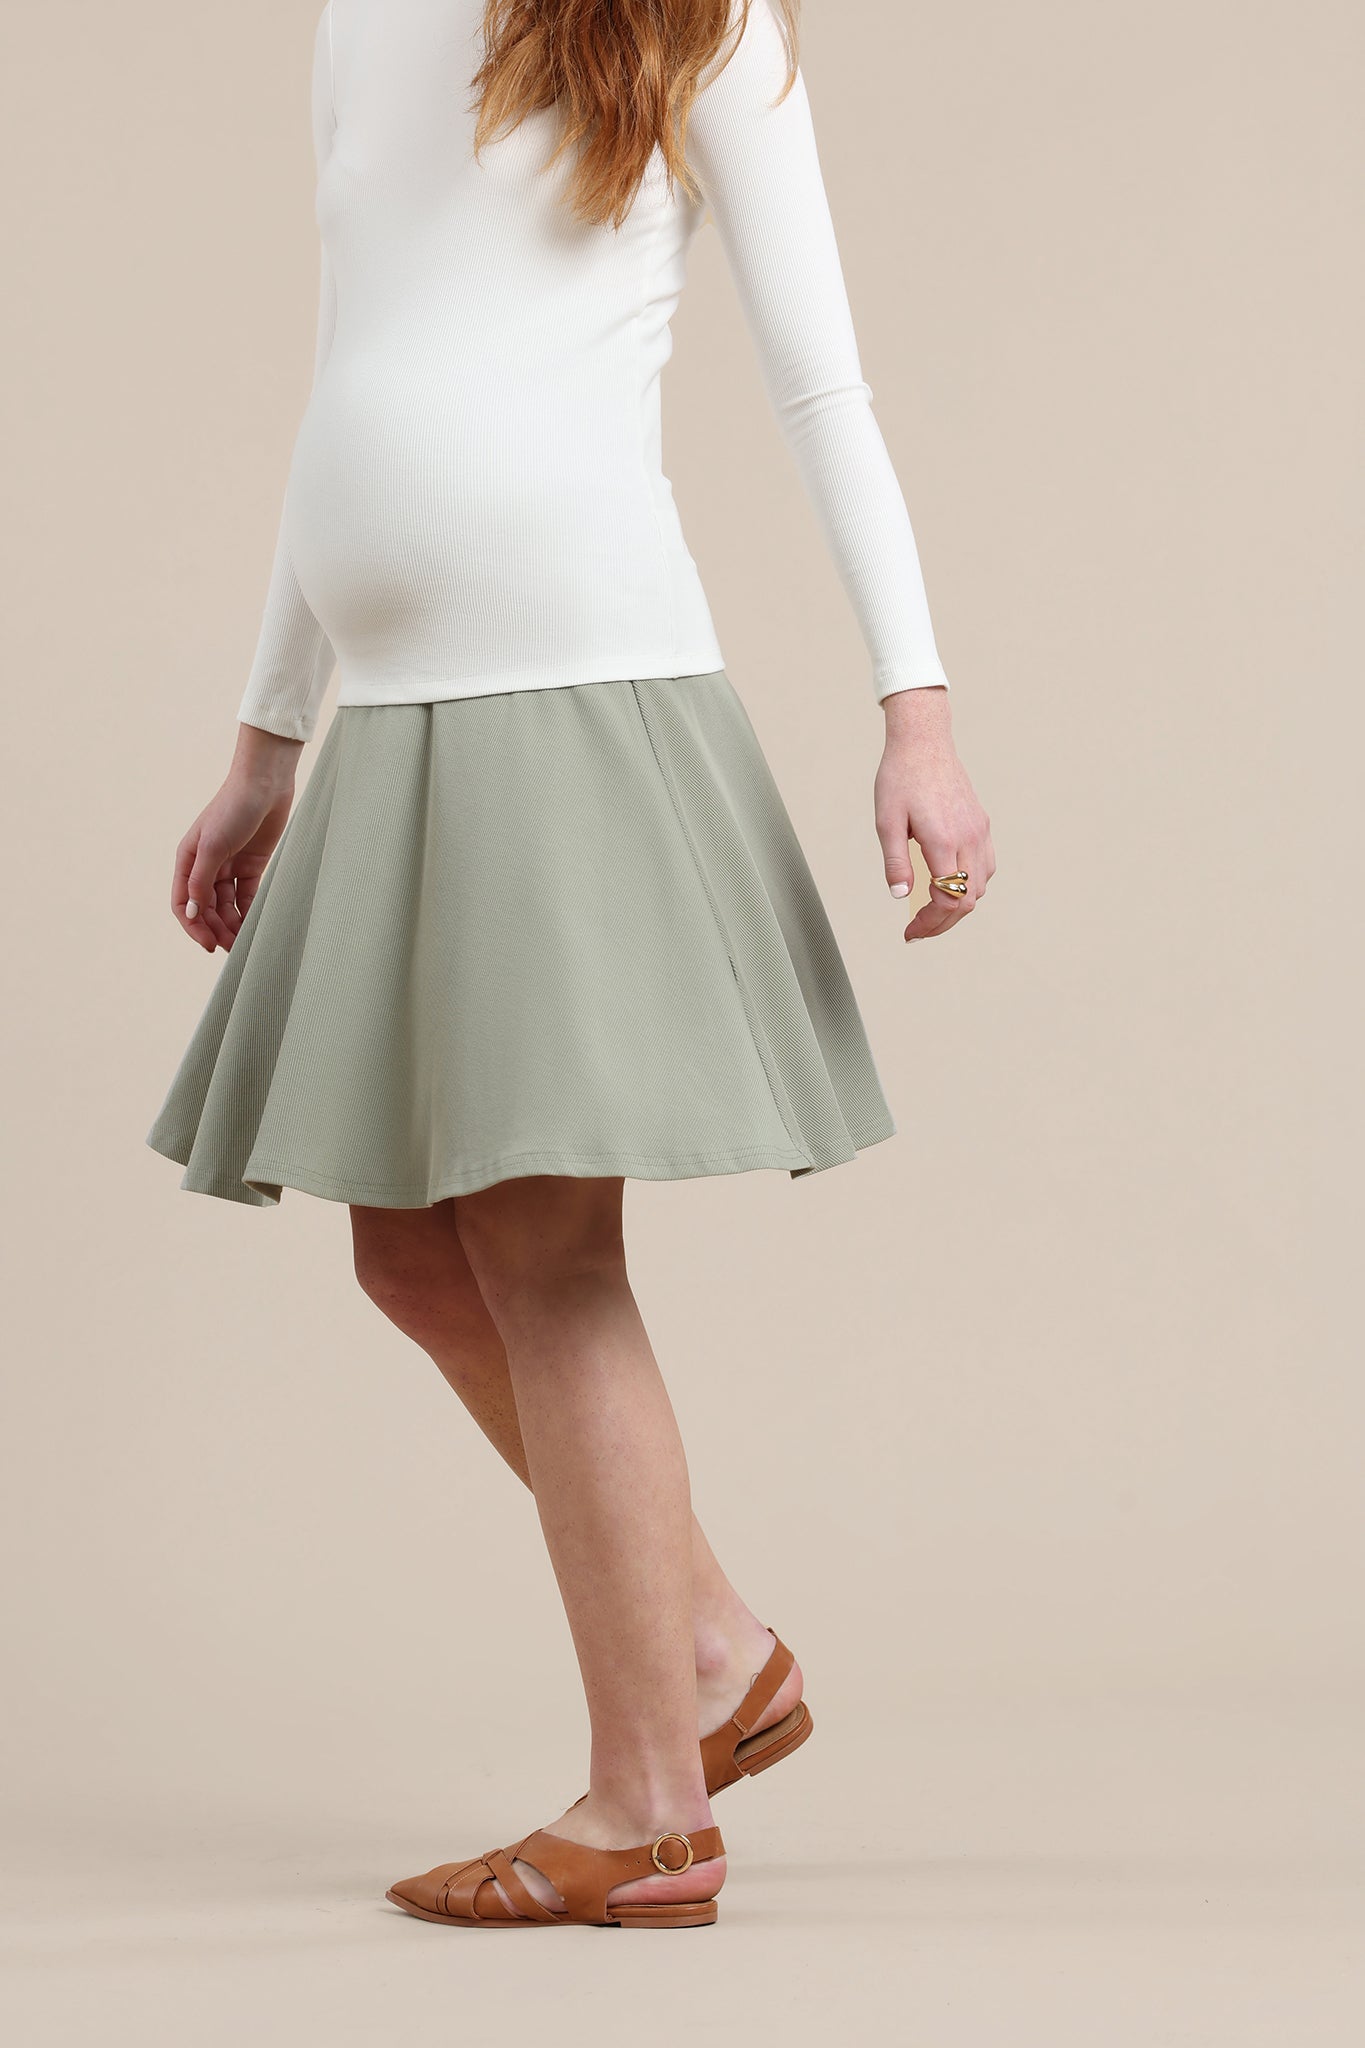 Amethyst Maternity Skirt in Light Sage